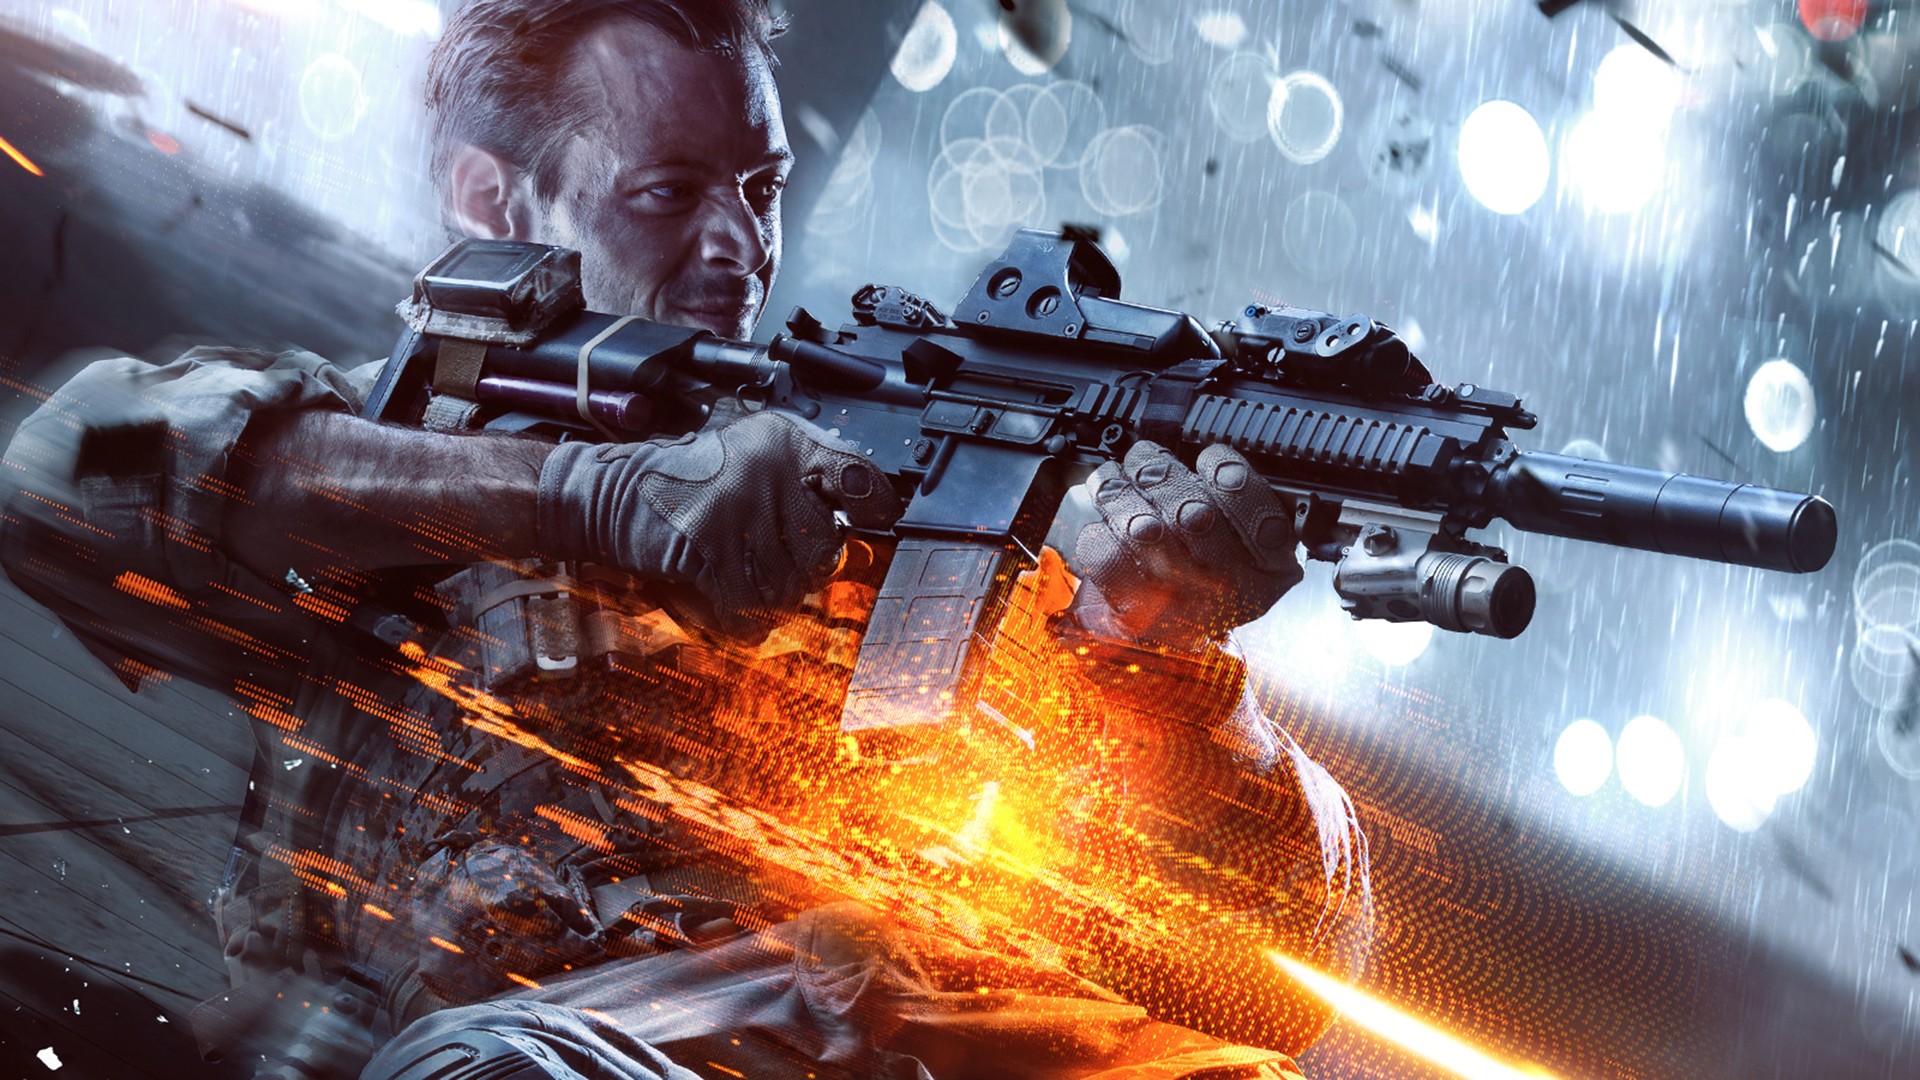 Battlefield 4 Wallpapers Hd Desktop And Mobile Backgrounds